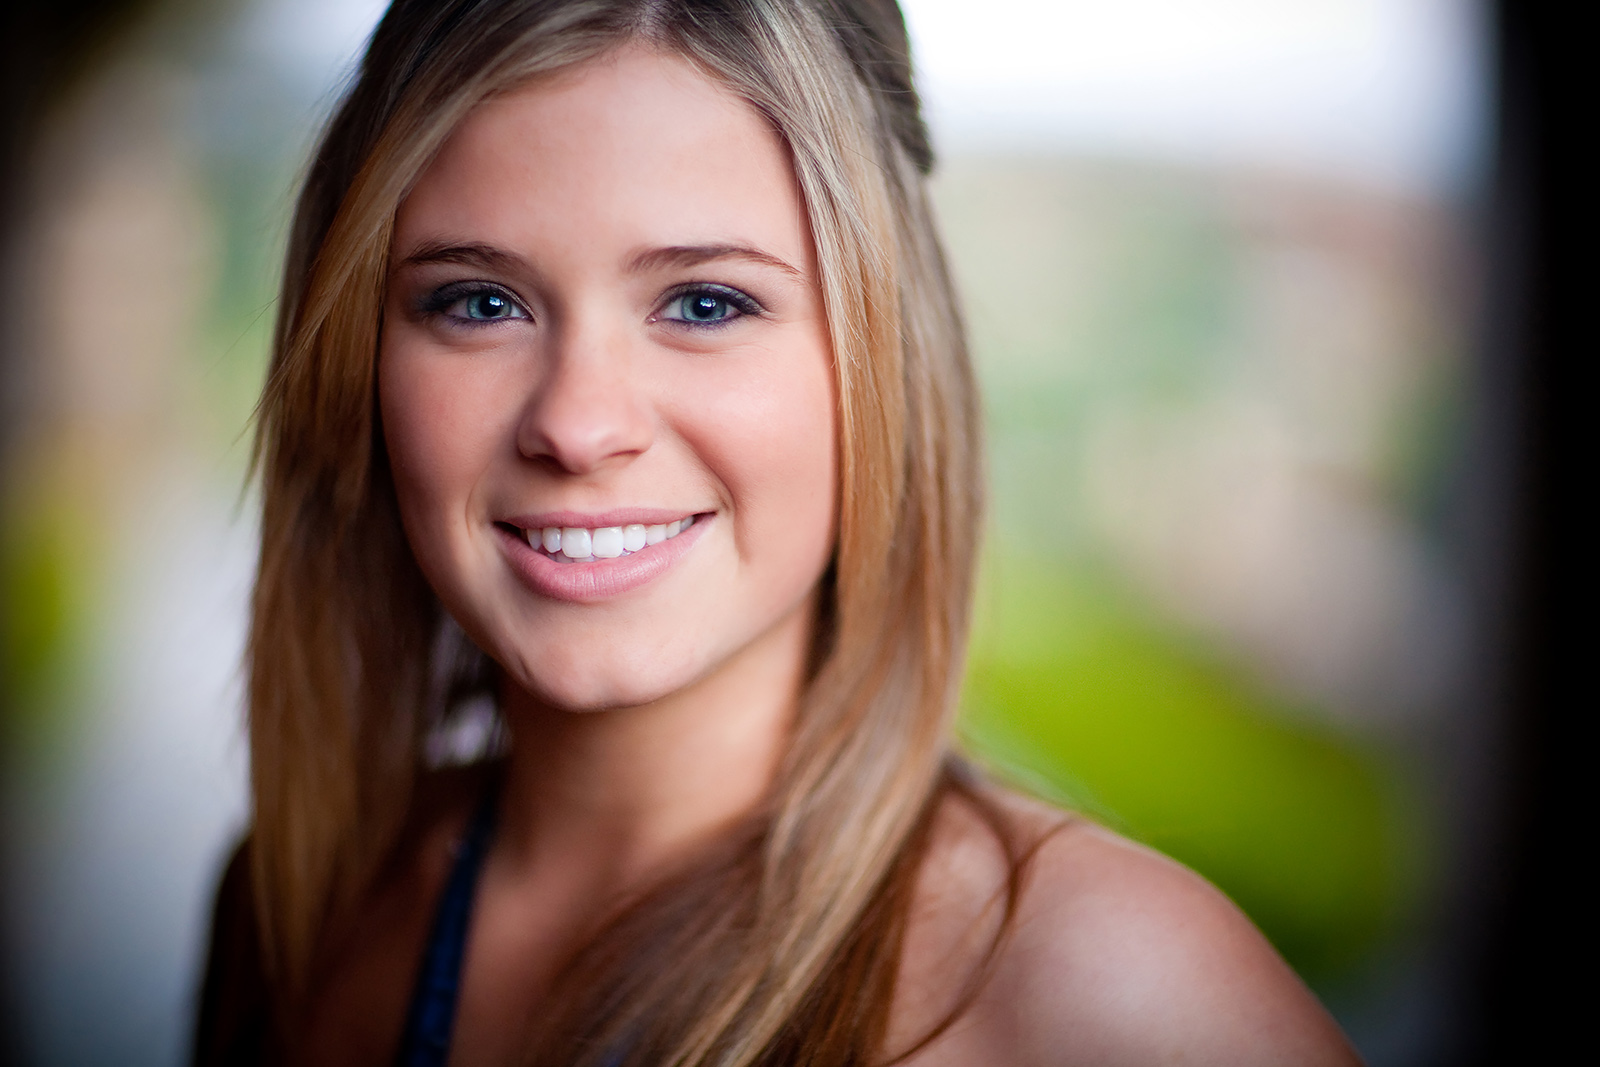 Color headshot portrait of blonde teenage girl smiling